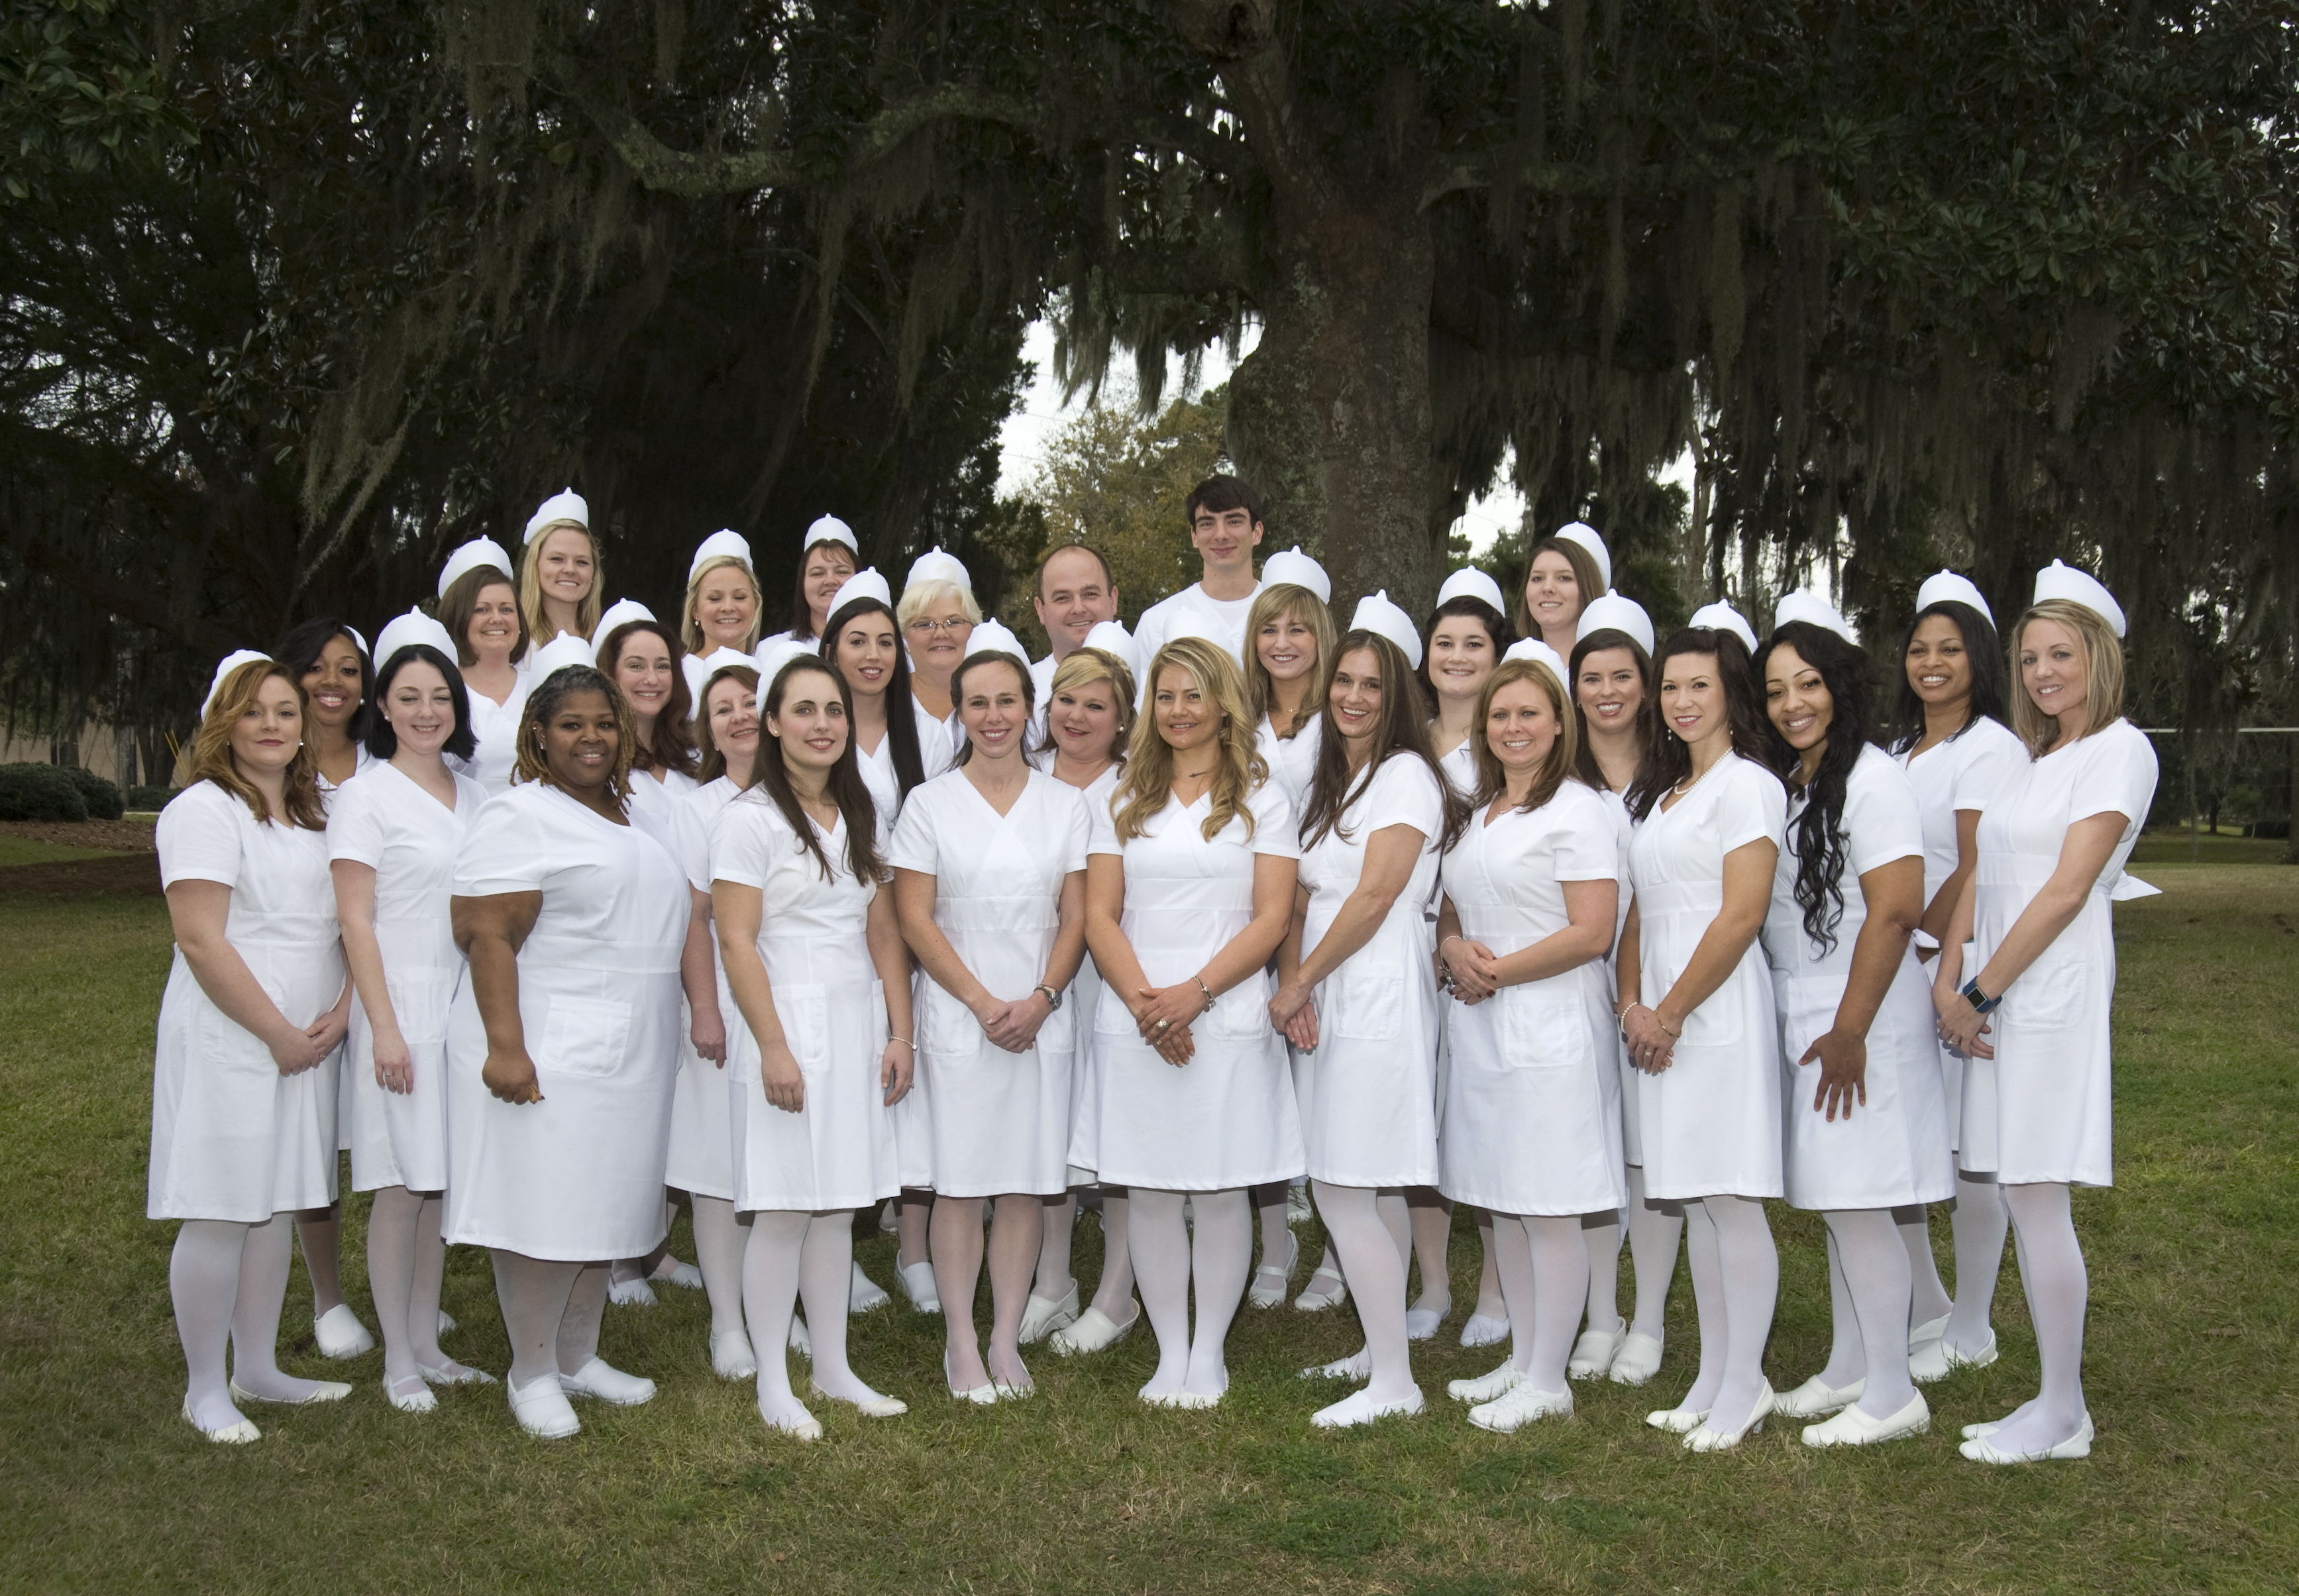 Technical College graduates 33 new nurses